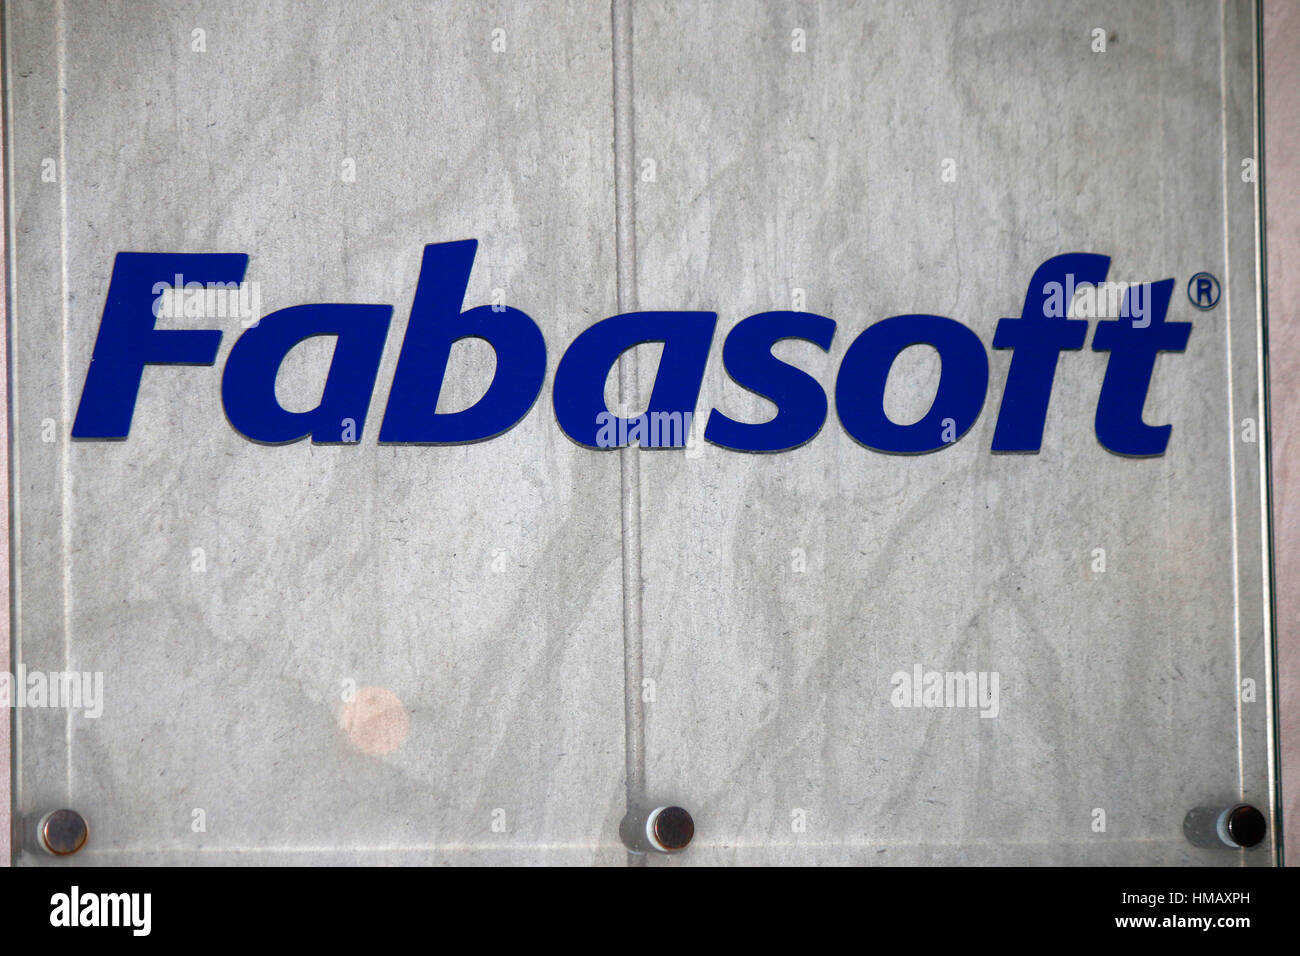 Das Logo der Marke "Fabasoft", Berlin. Stockfoto